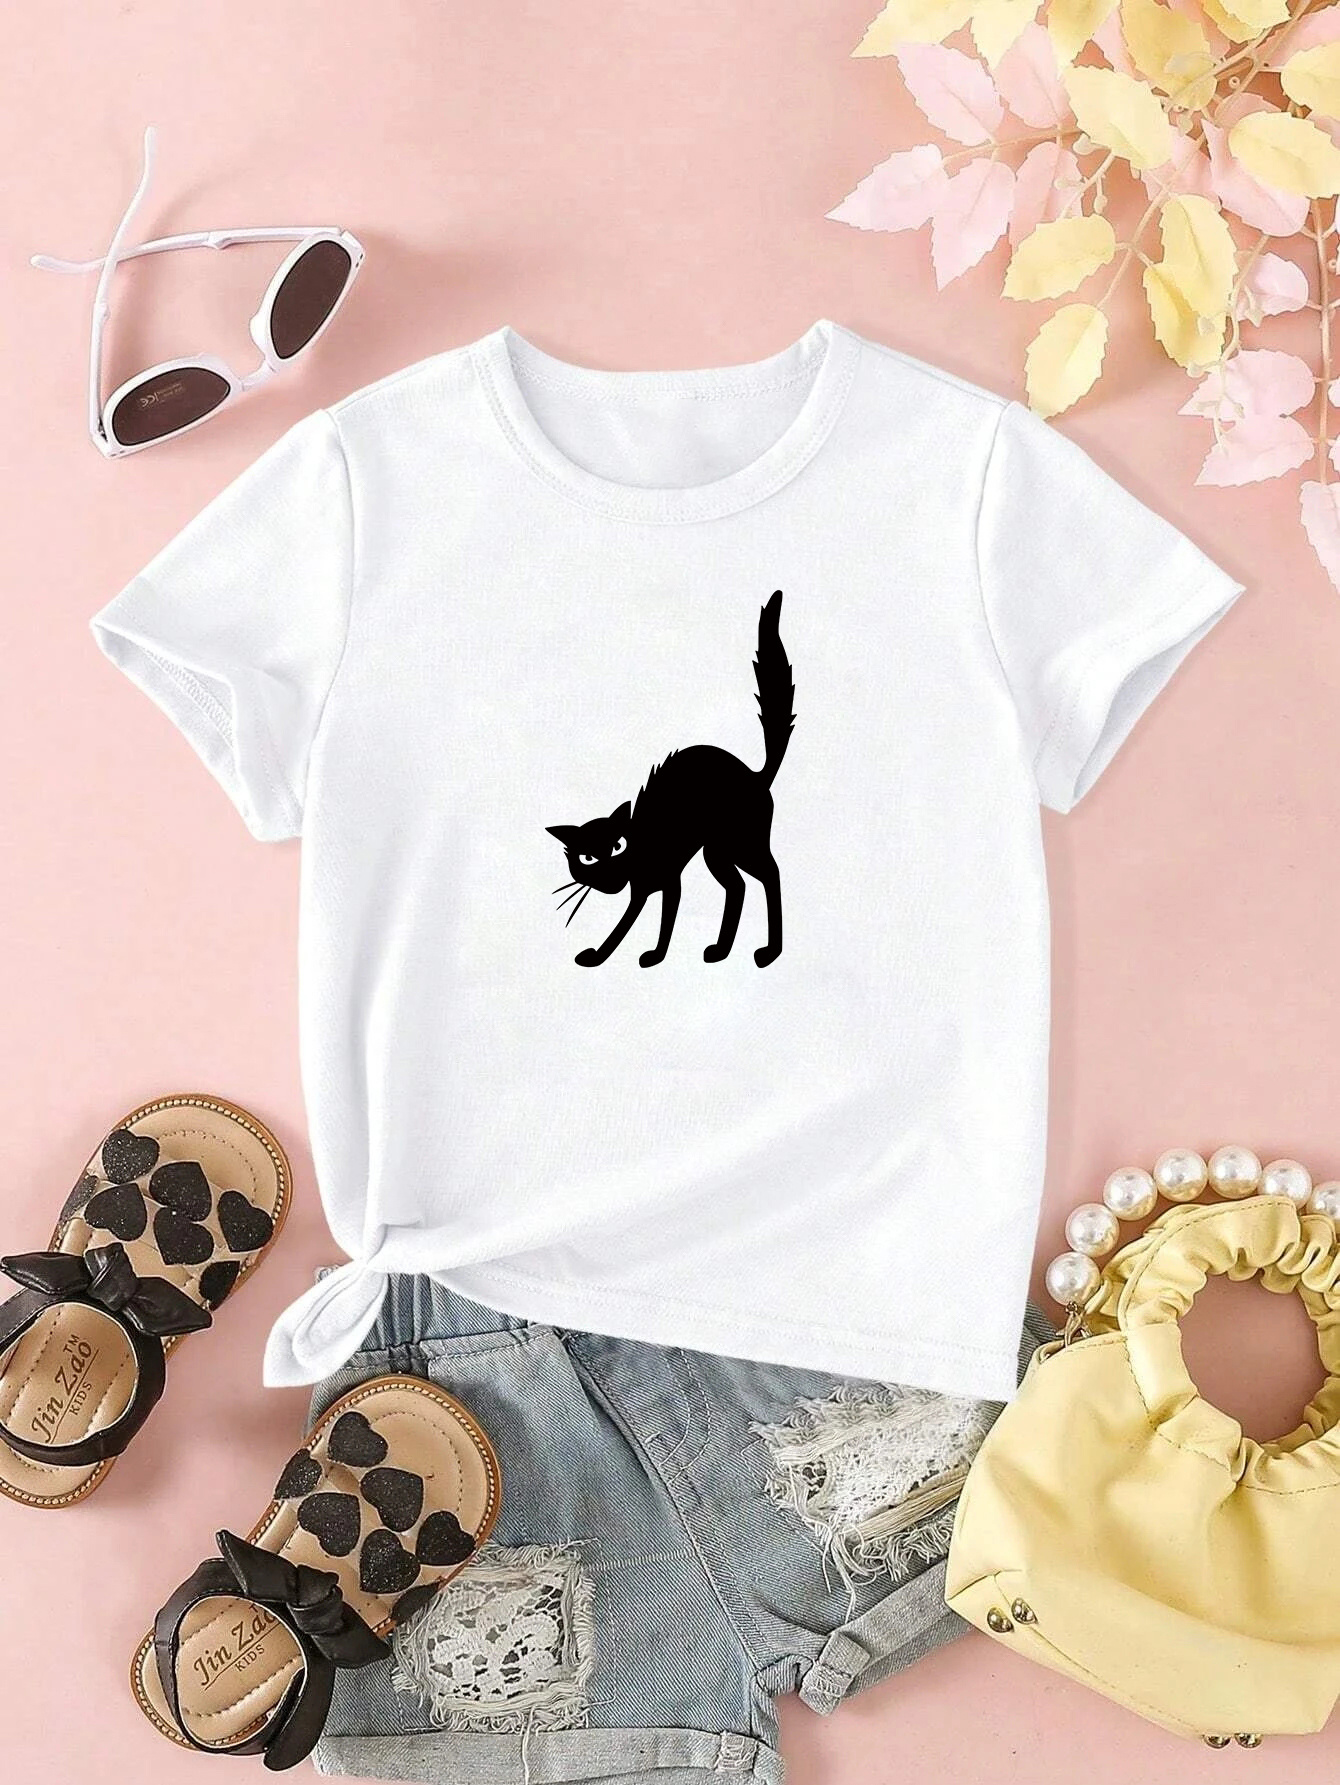 Girls Cartoon Black Cat Graphic Short Sleeve T-shirt Comfy Fit